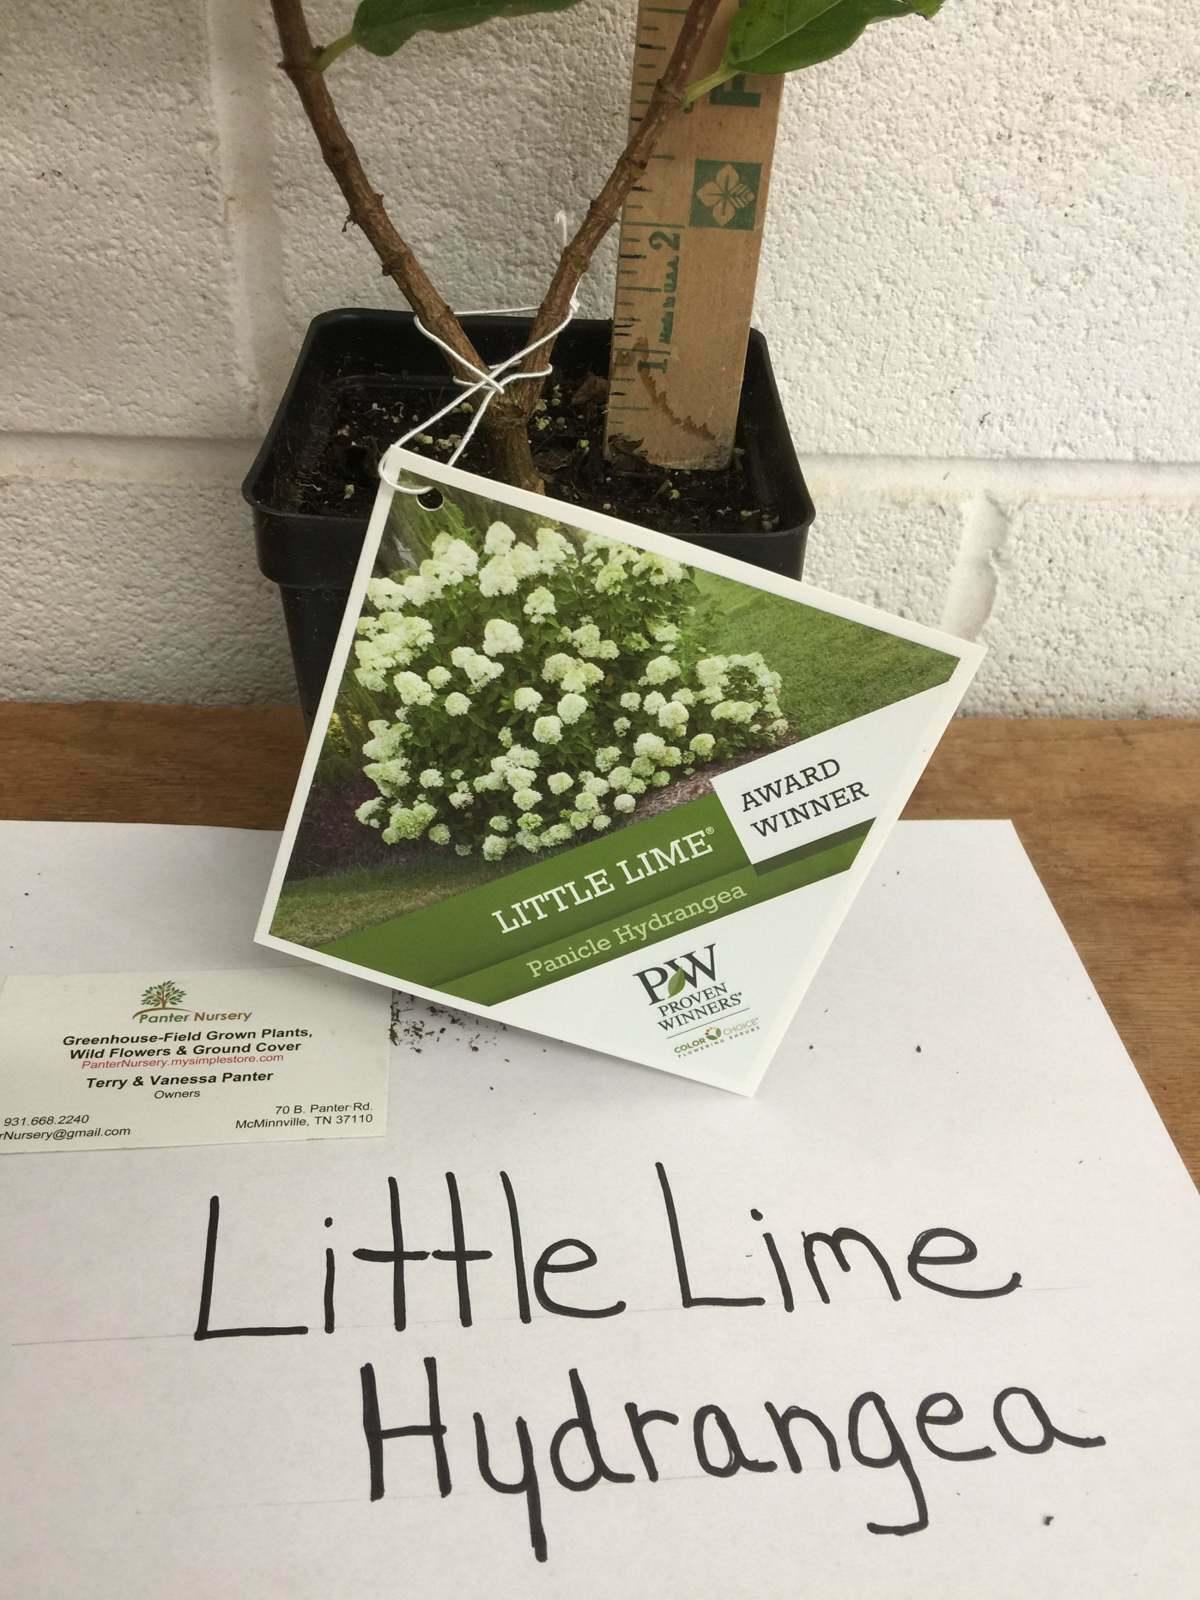 Little Lime Panicle Hardy Hydrangea Shrub/Bush - 6-10" Tall Live Plant - Qt. Pot - The Nursery Center